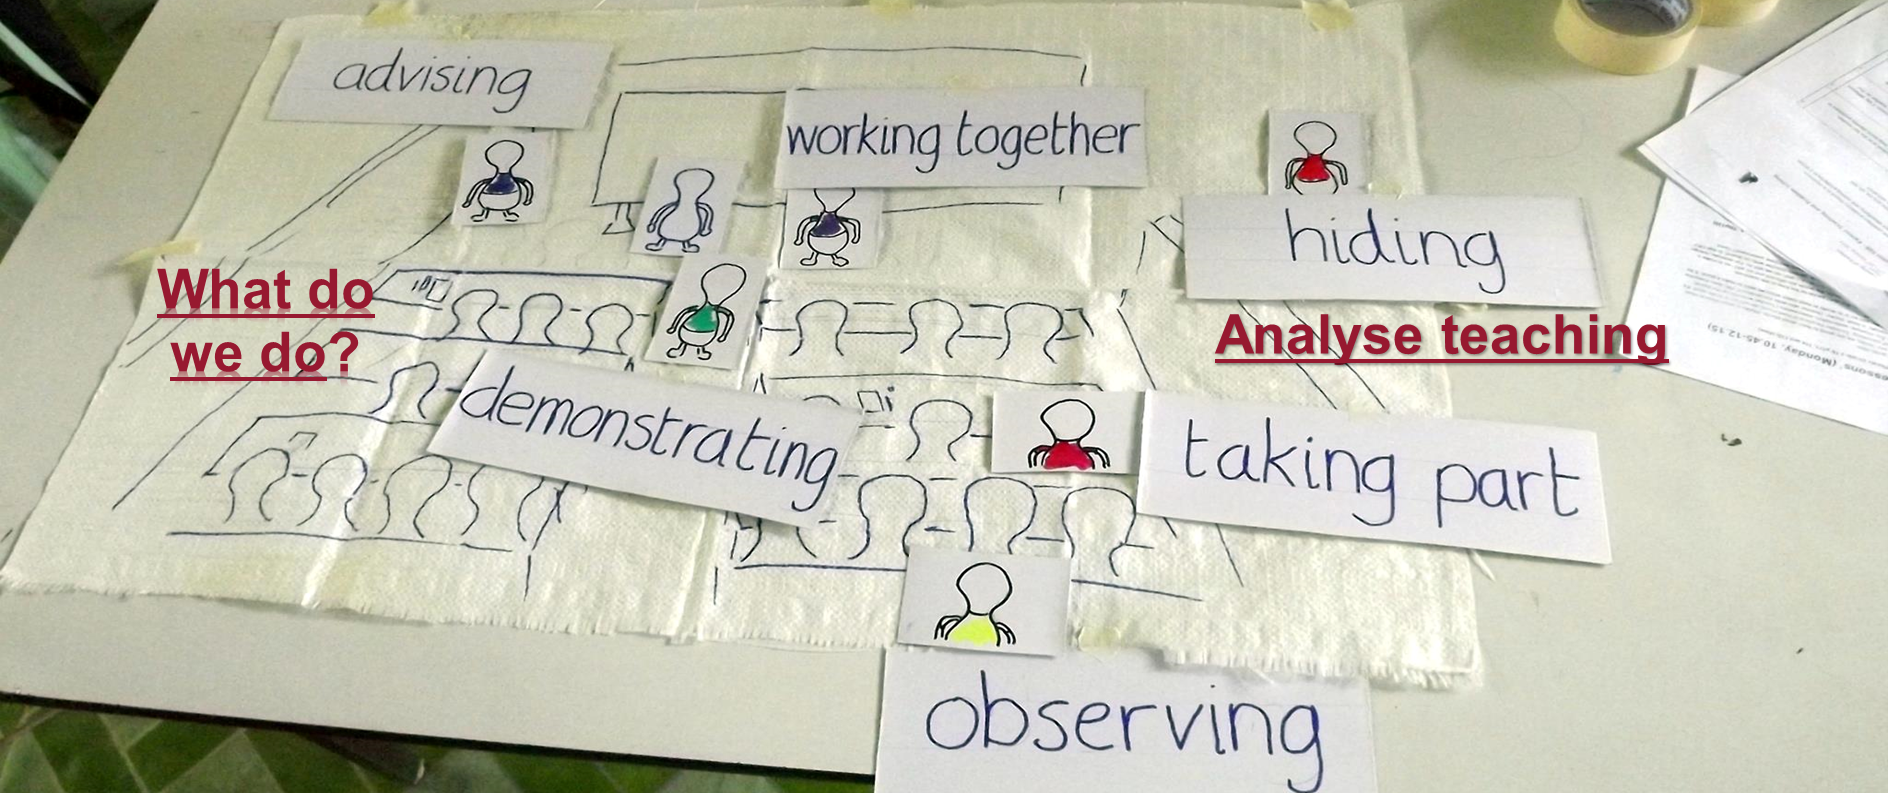 Analyse teaching